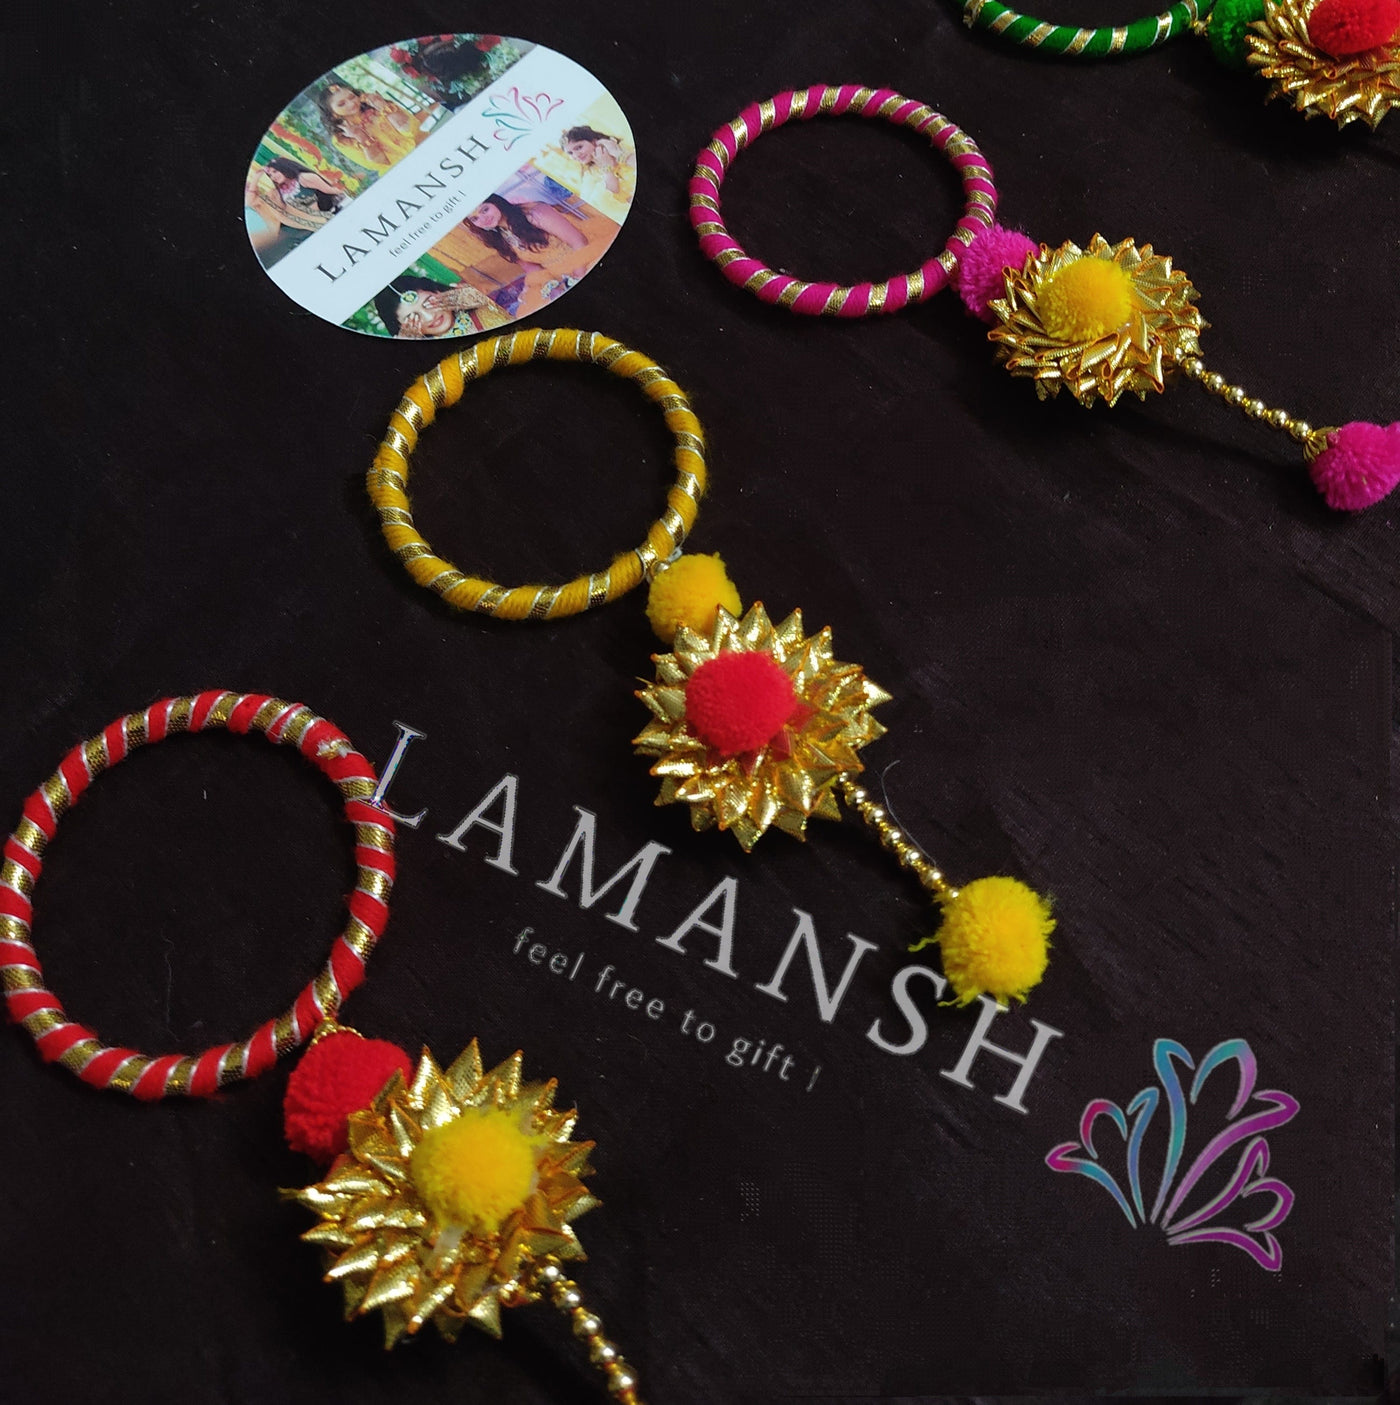 LAMANSH Gota chudi bangles Assorted Mix colors / 50 Gota Bangles LAMANSH® (Set of 50 pcs , Size : 2-6 ) Floral 🌸 Gota Bangles set for wedding Favors /Mehendi Favors for Bridesmaid